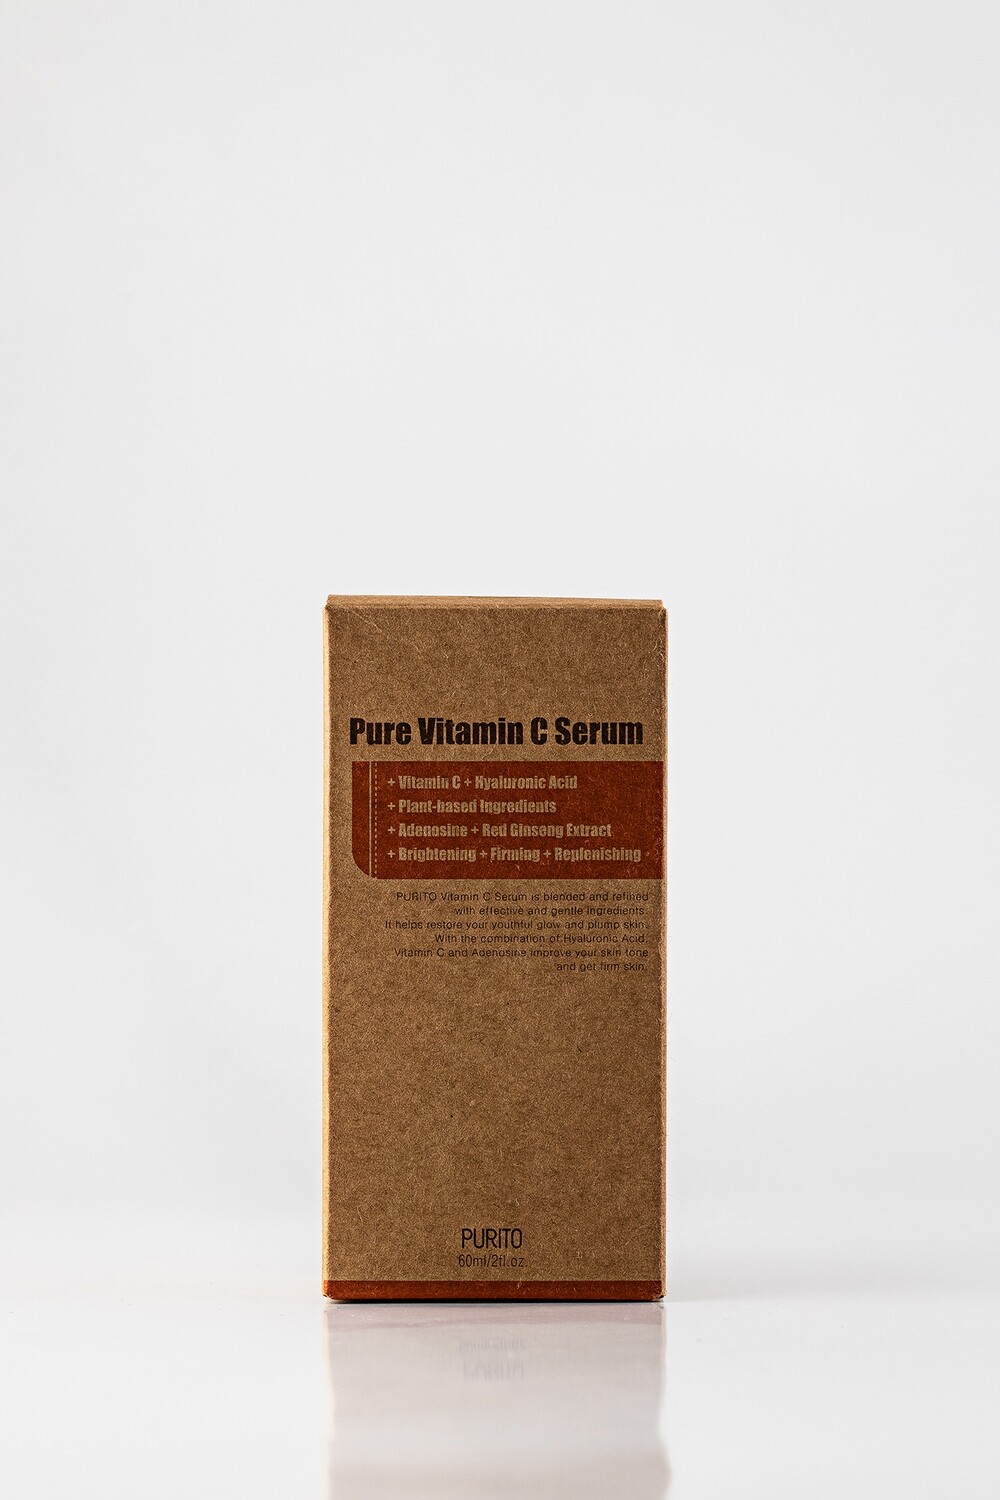 Purito Pure Vitamin C Serum